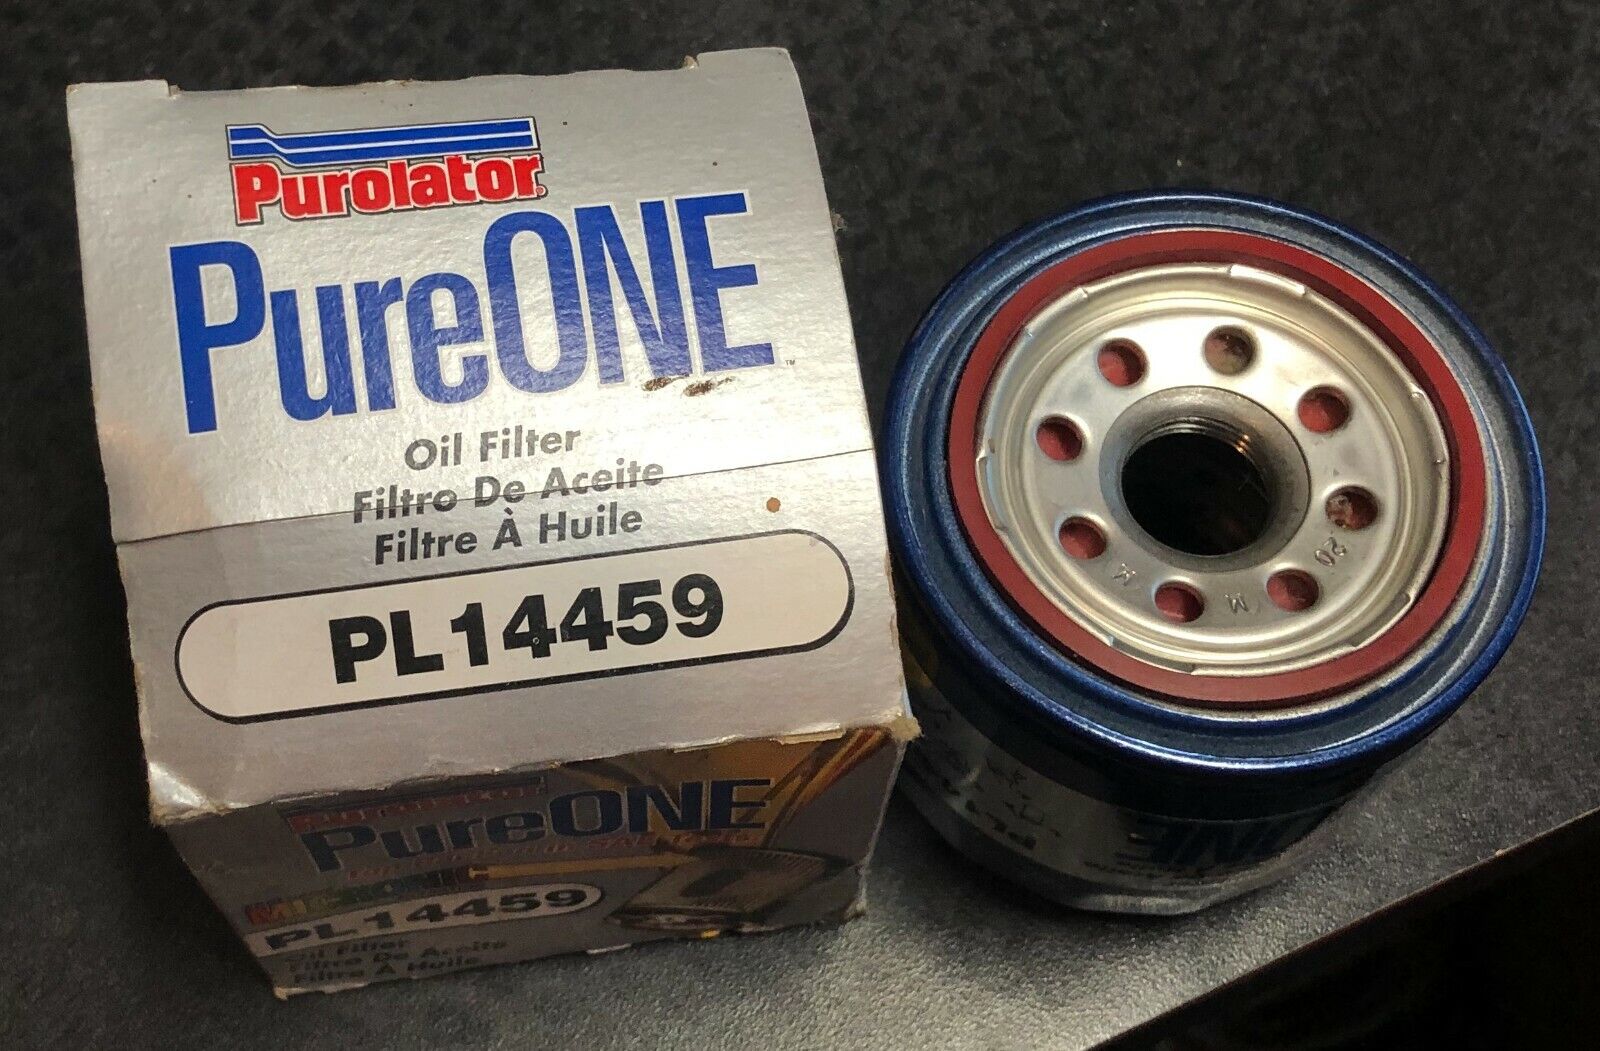 PureONE oil filter PL 14459